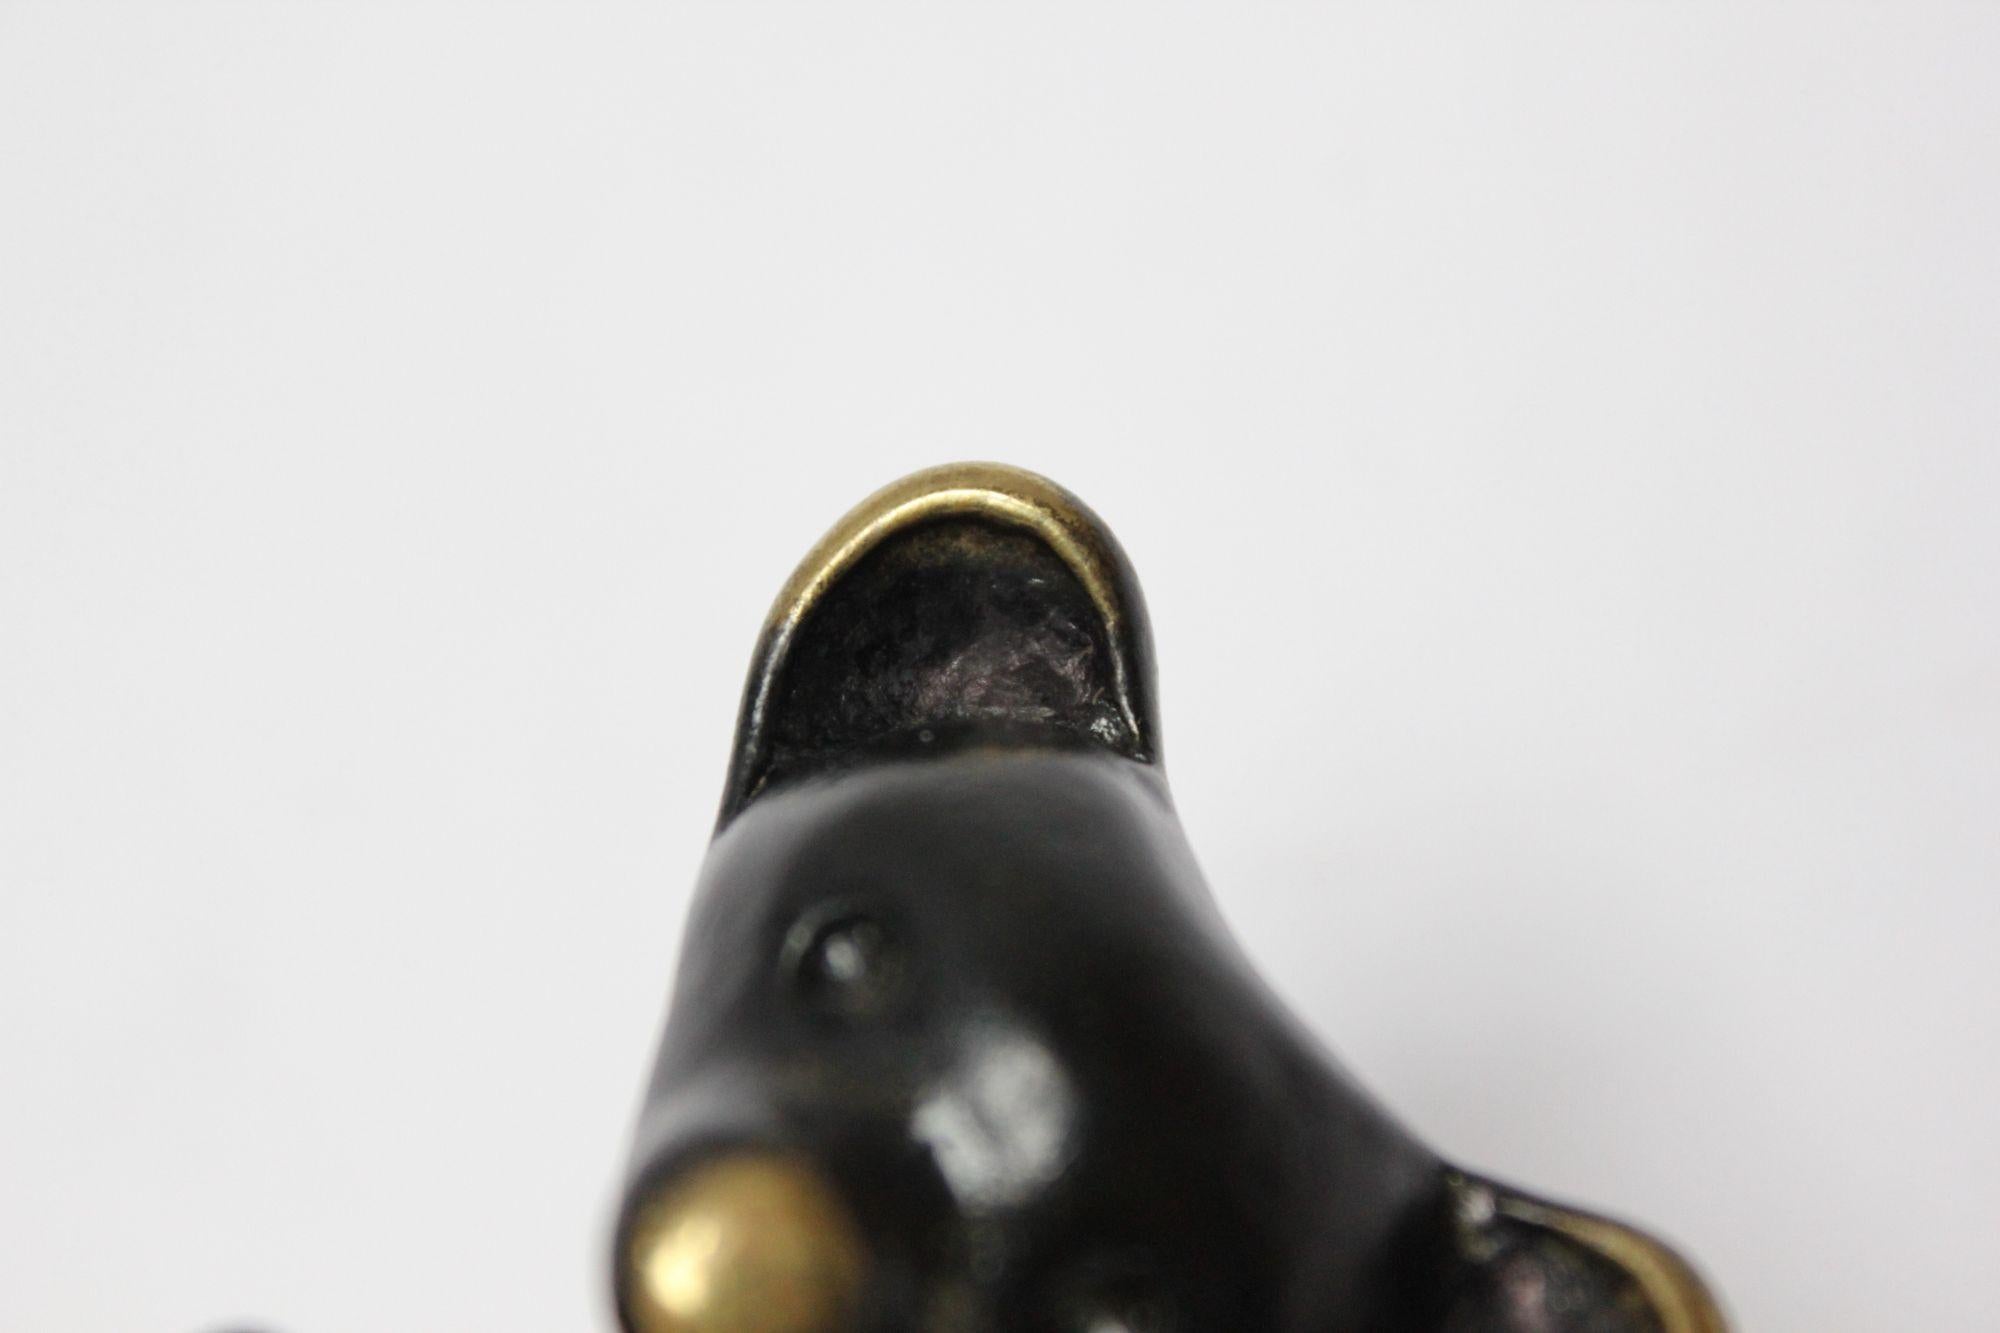 Blackened Brass Bear Candleholder/Figurine by Walter Bosse and Herta Baller For Sale 4